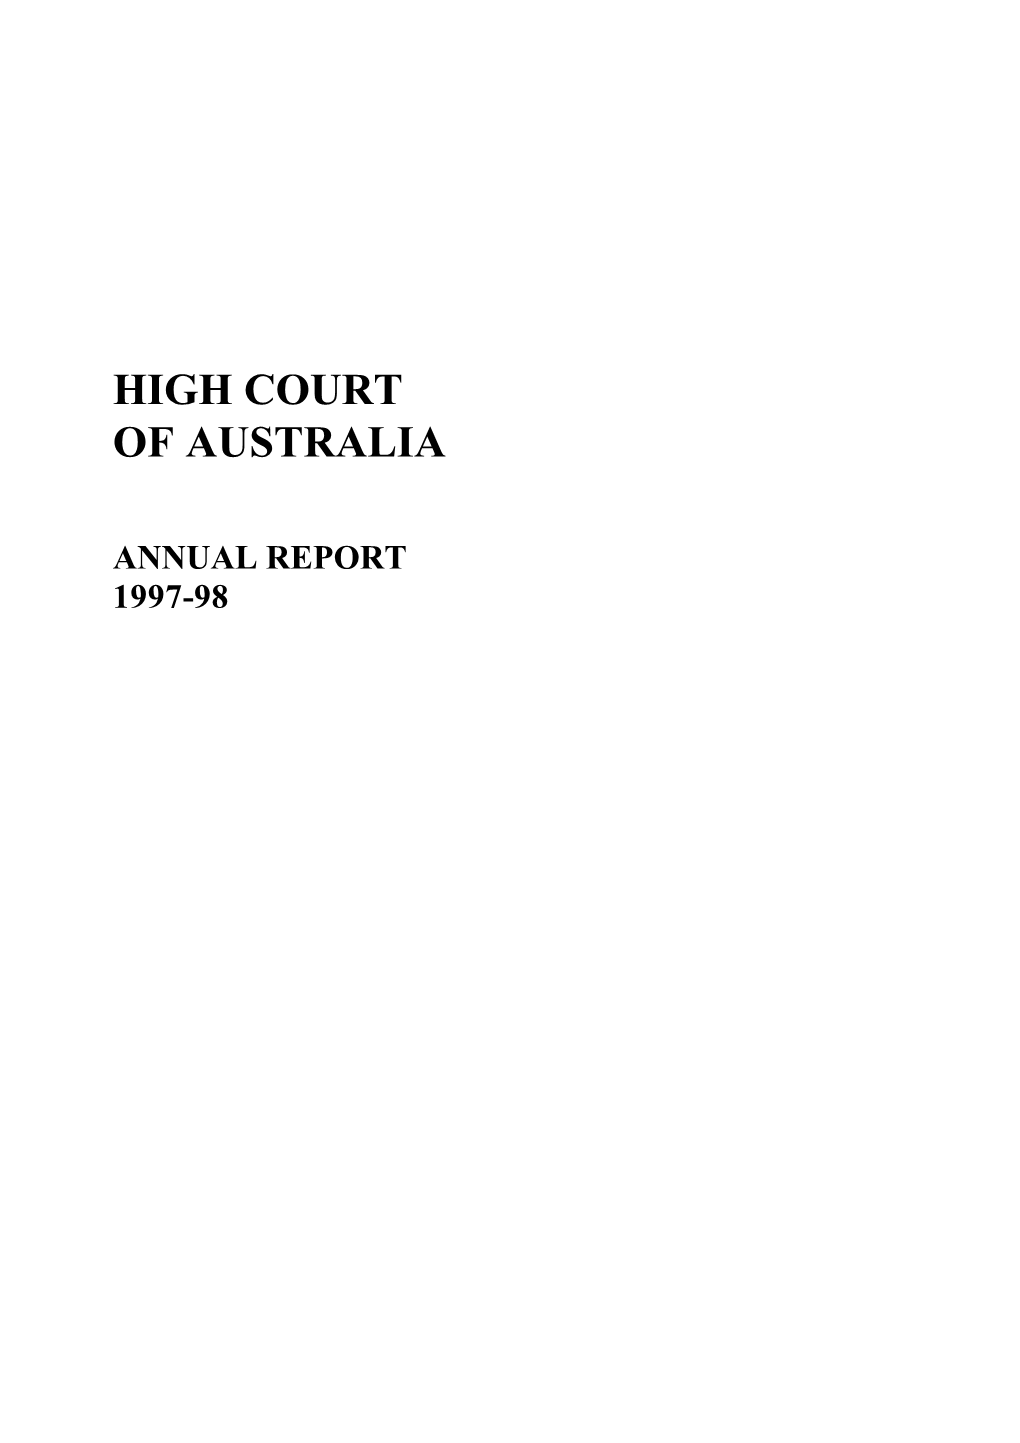 1998 Annual Report